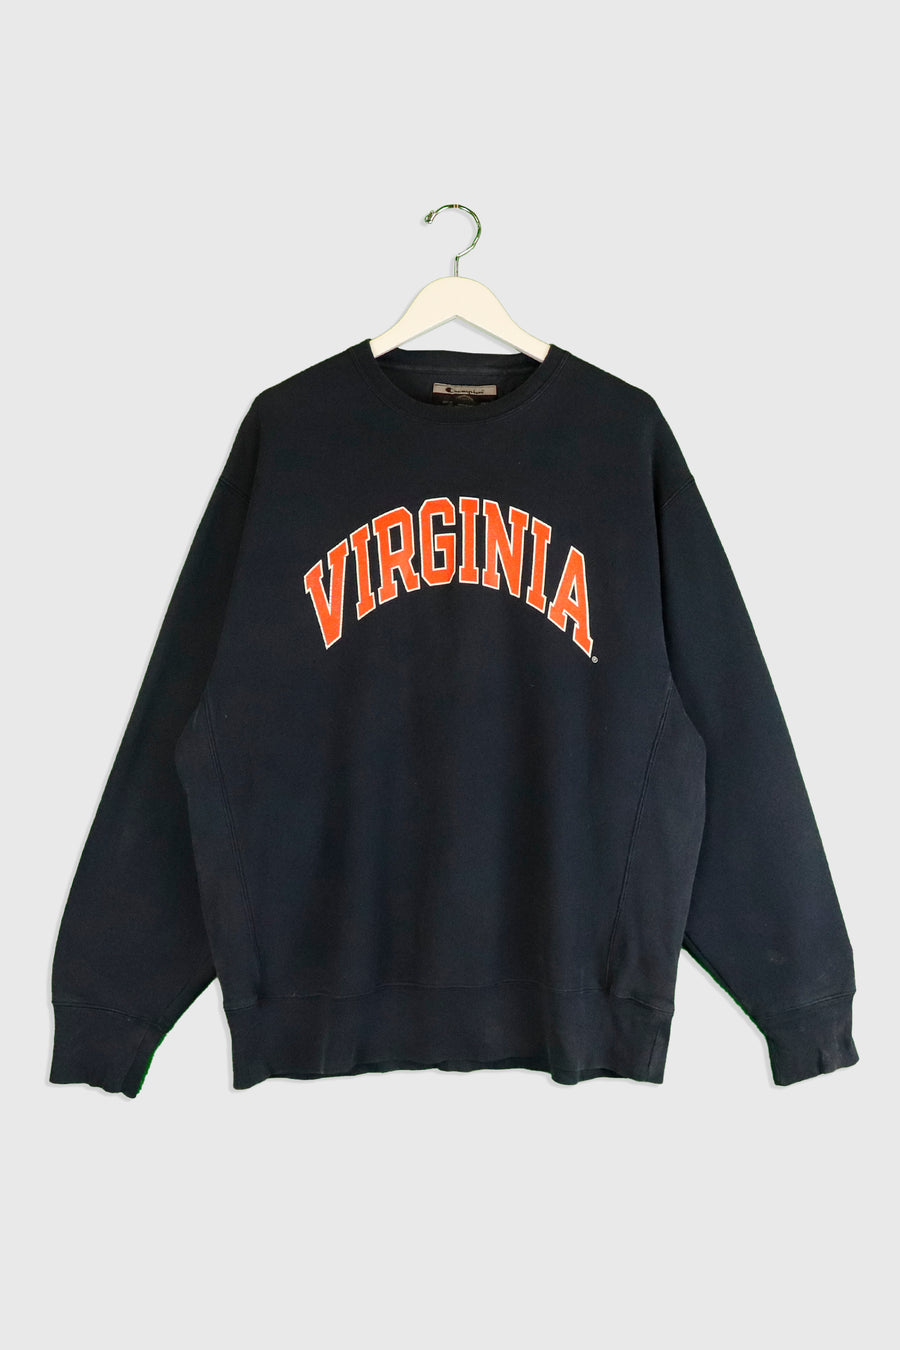 Vintage Virginia State Varsity Vinyl Sweatshirt Sz L